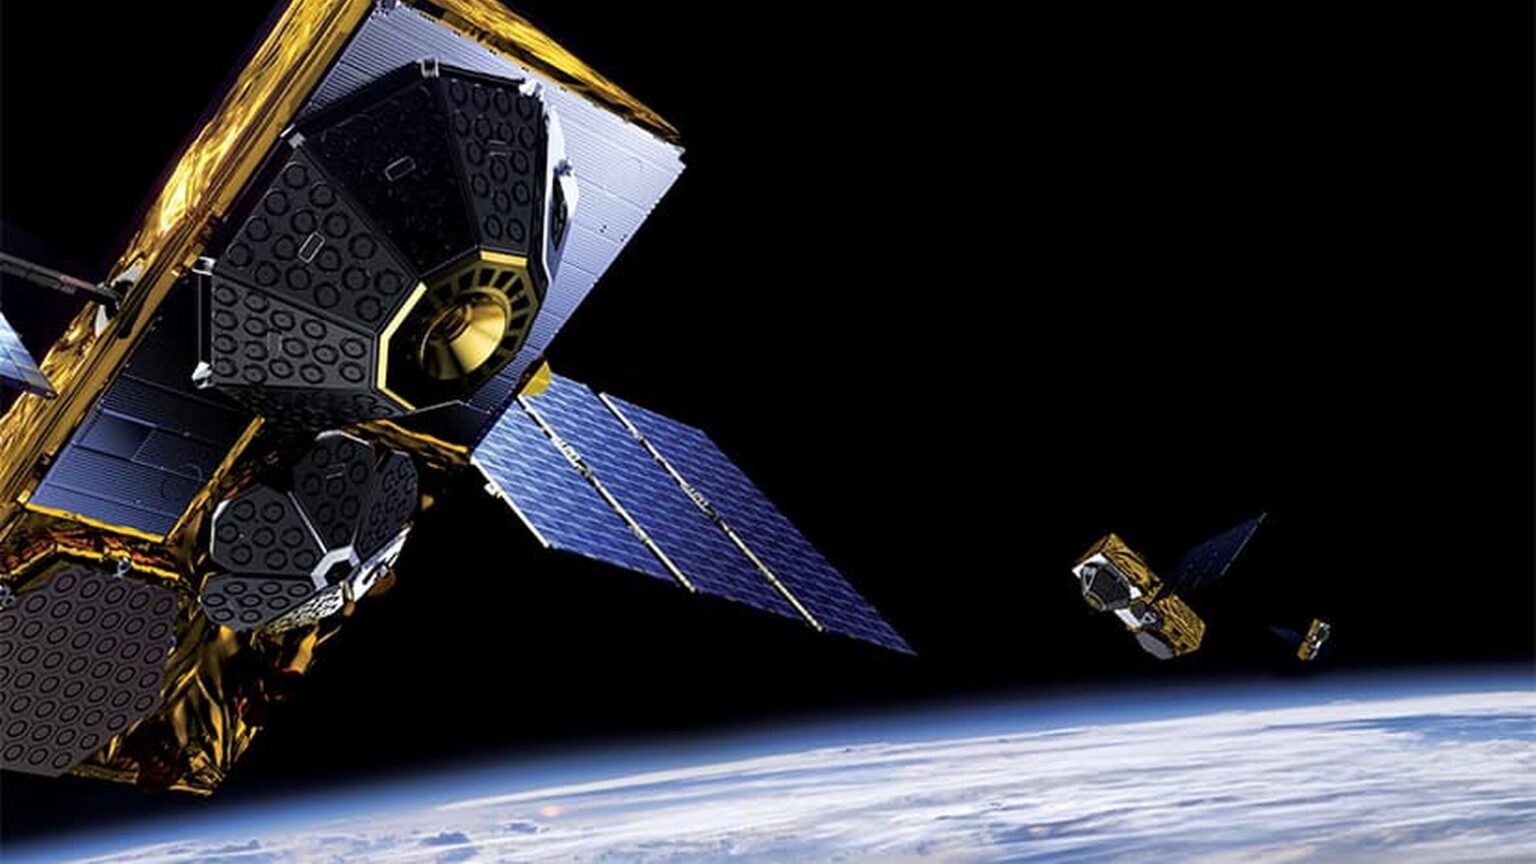 Globalstar satellites